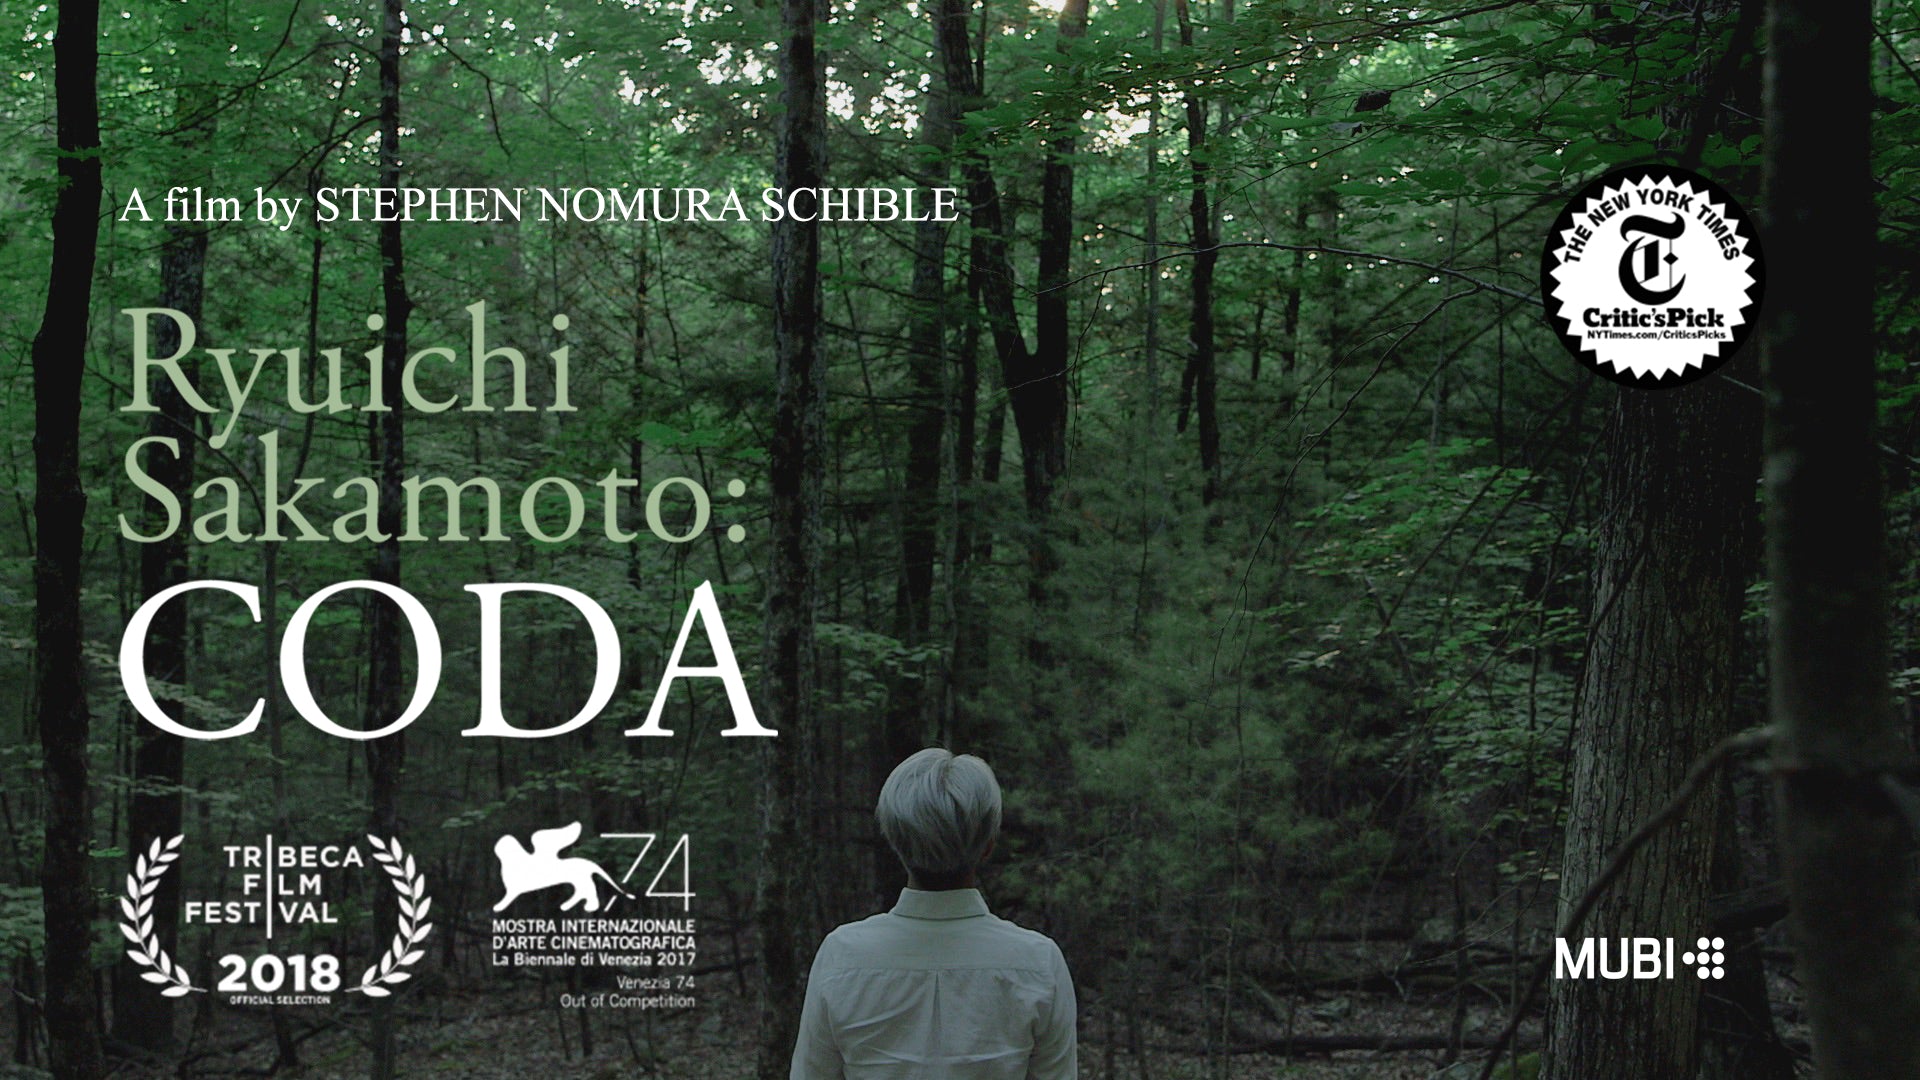 RYUICHI SAKAMOTO FILM & DINNER - FRIDAY 29TH SEPT